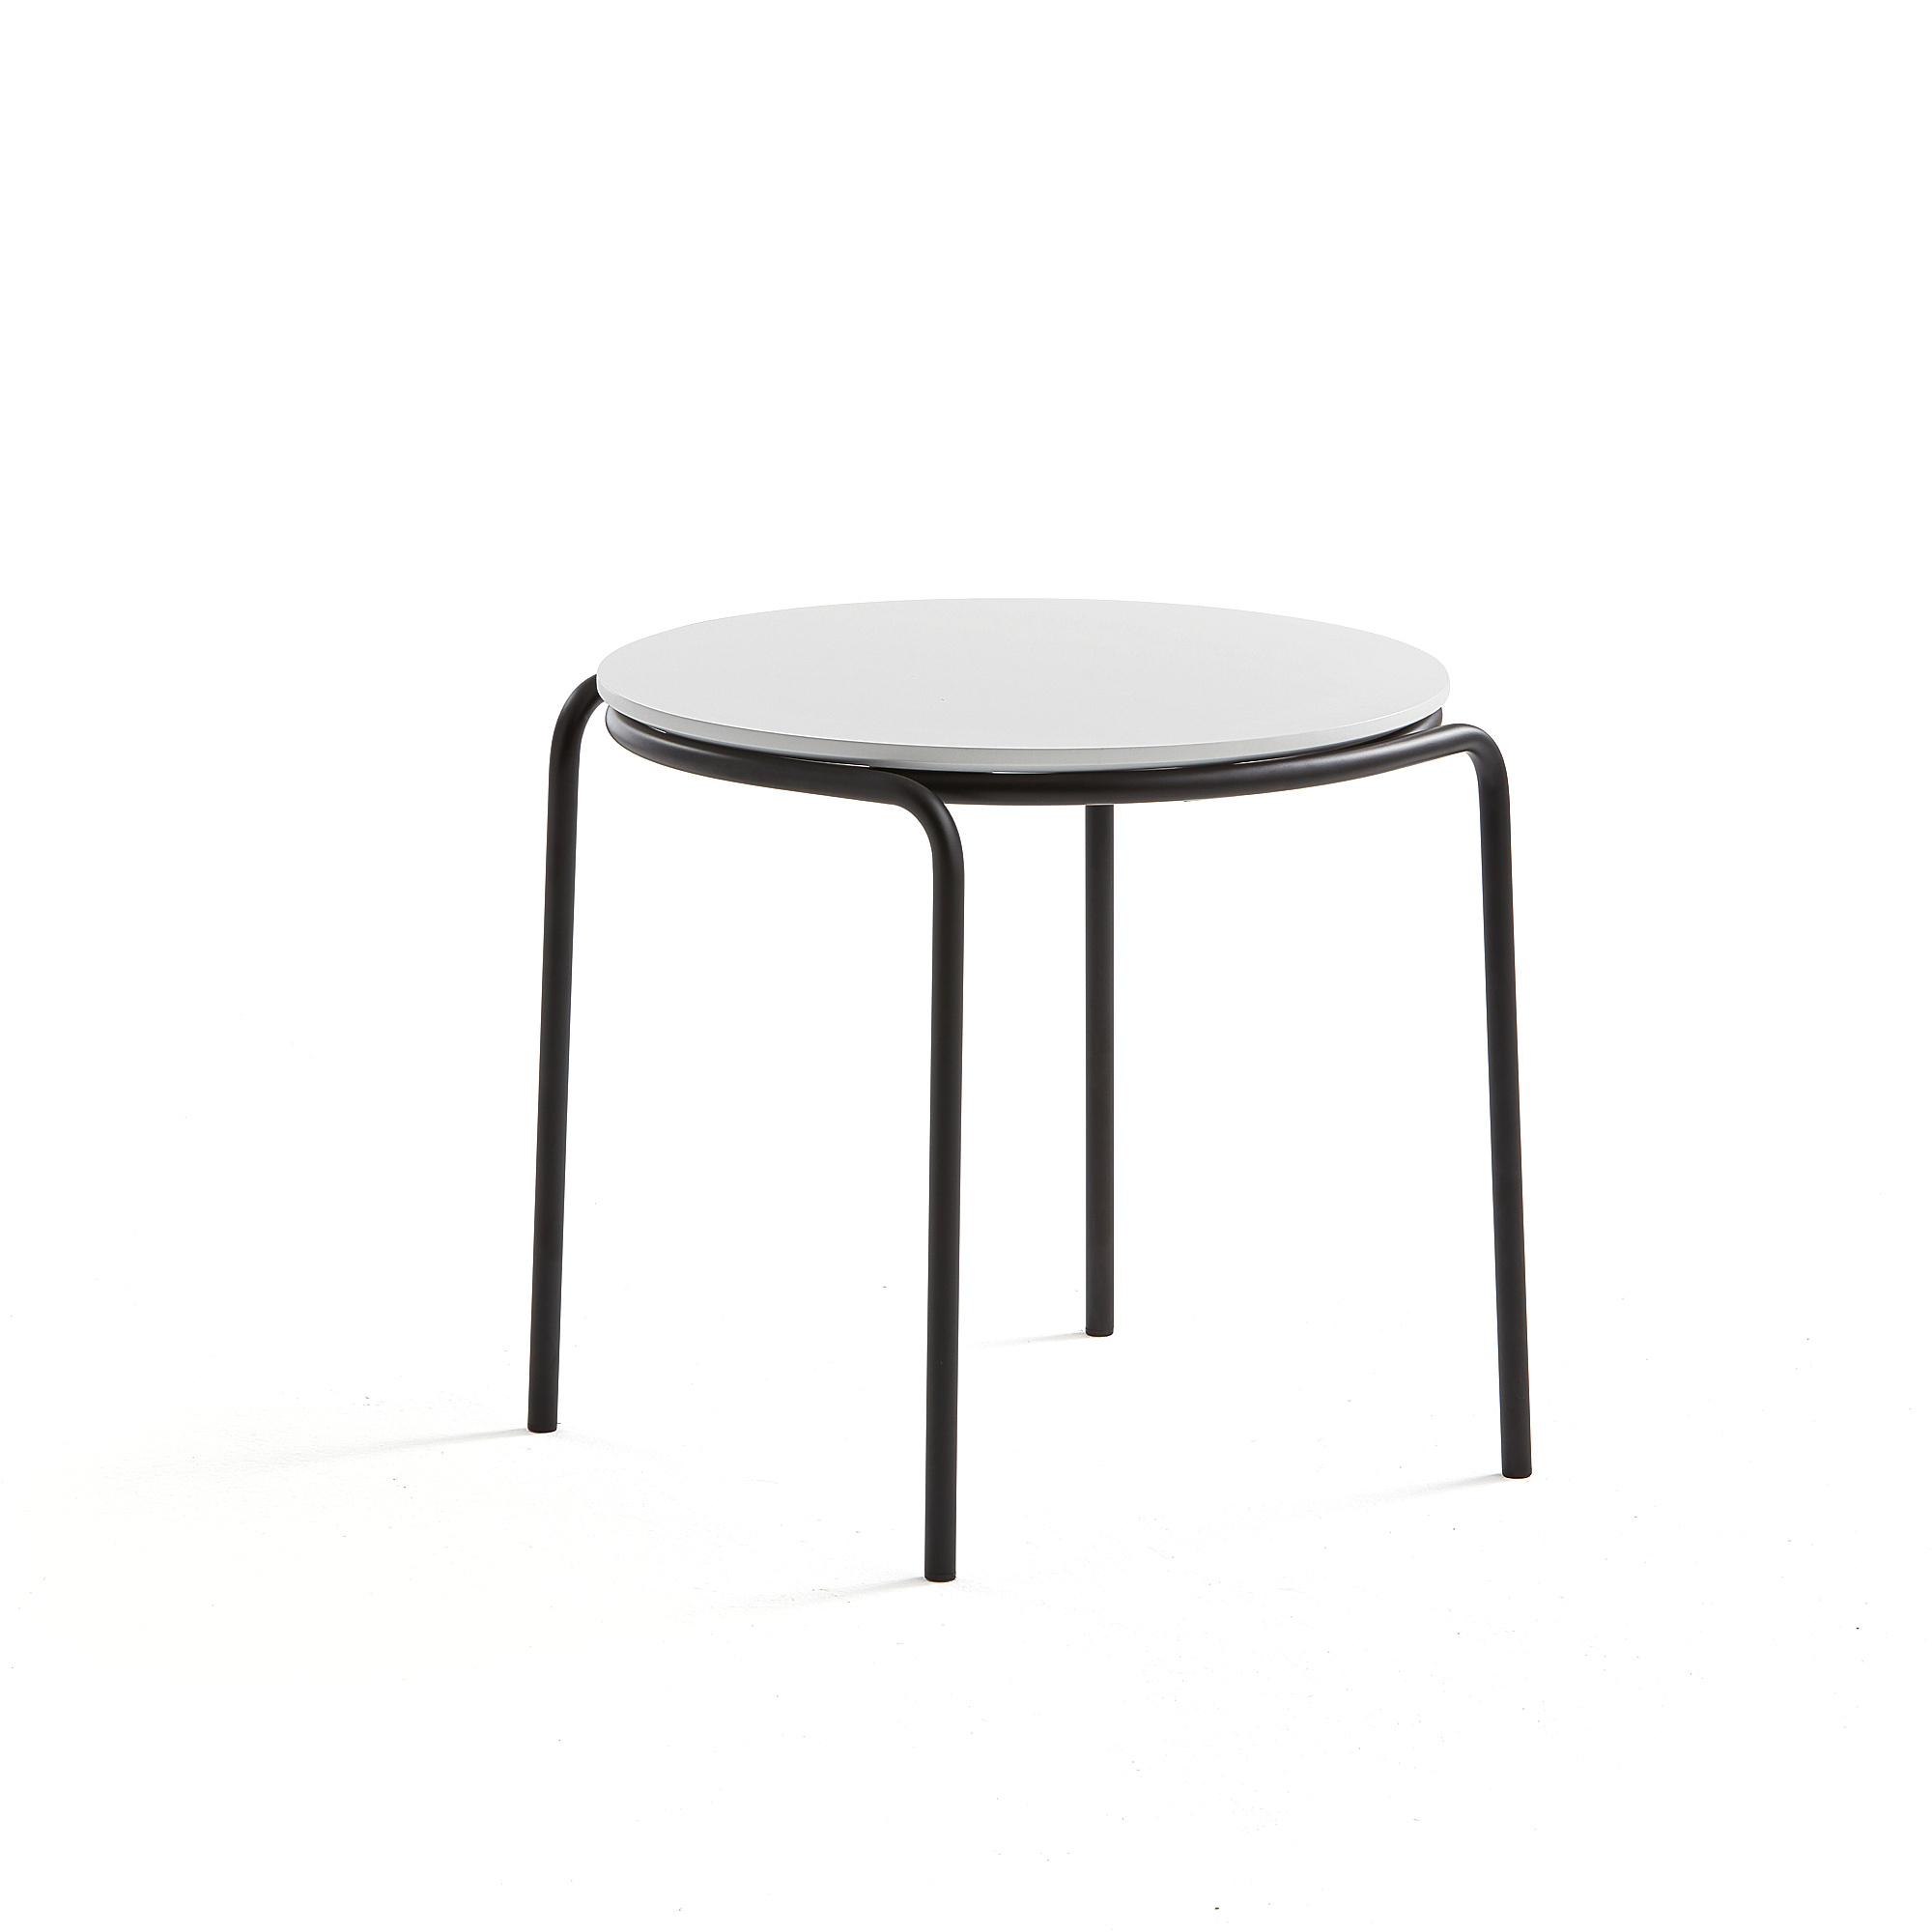 E-shop Konferenčný stolík Ashley, Ø570 x 470 mm, čierna, biela